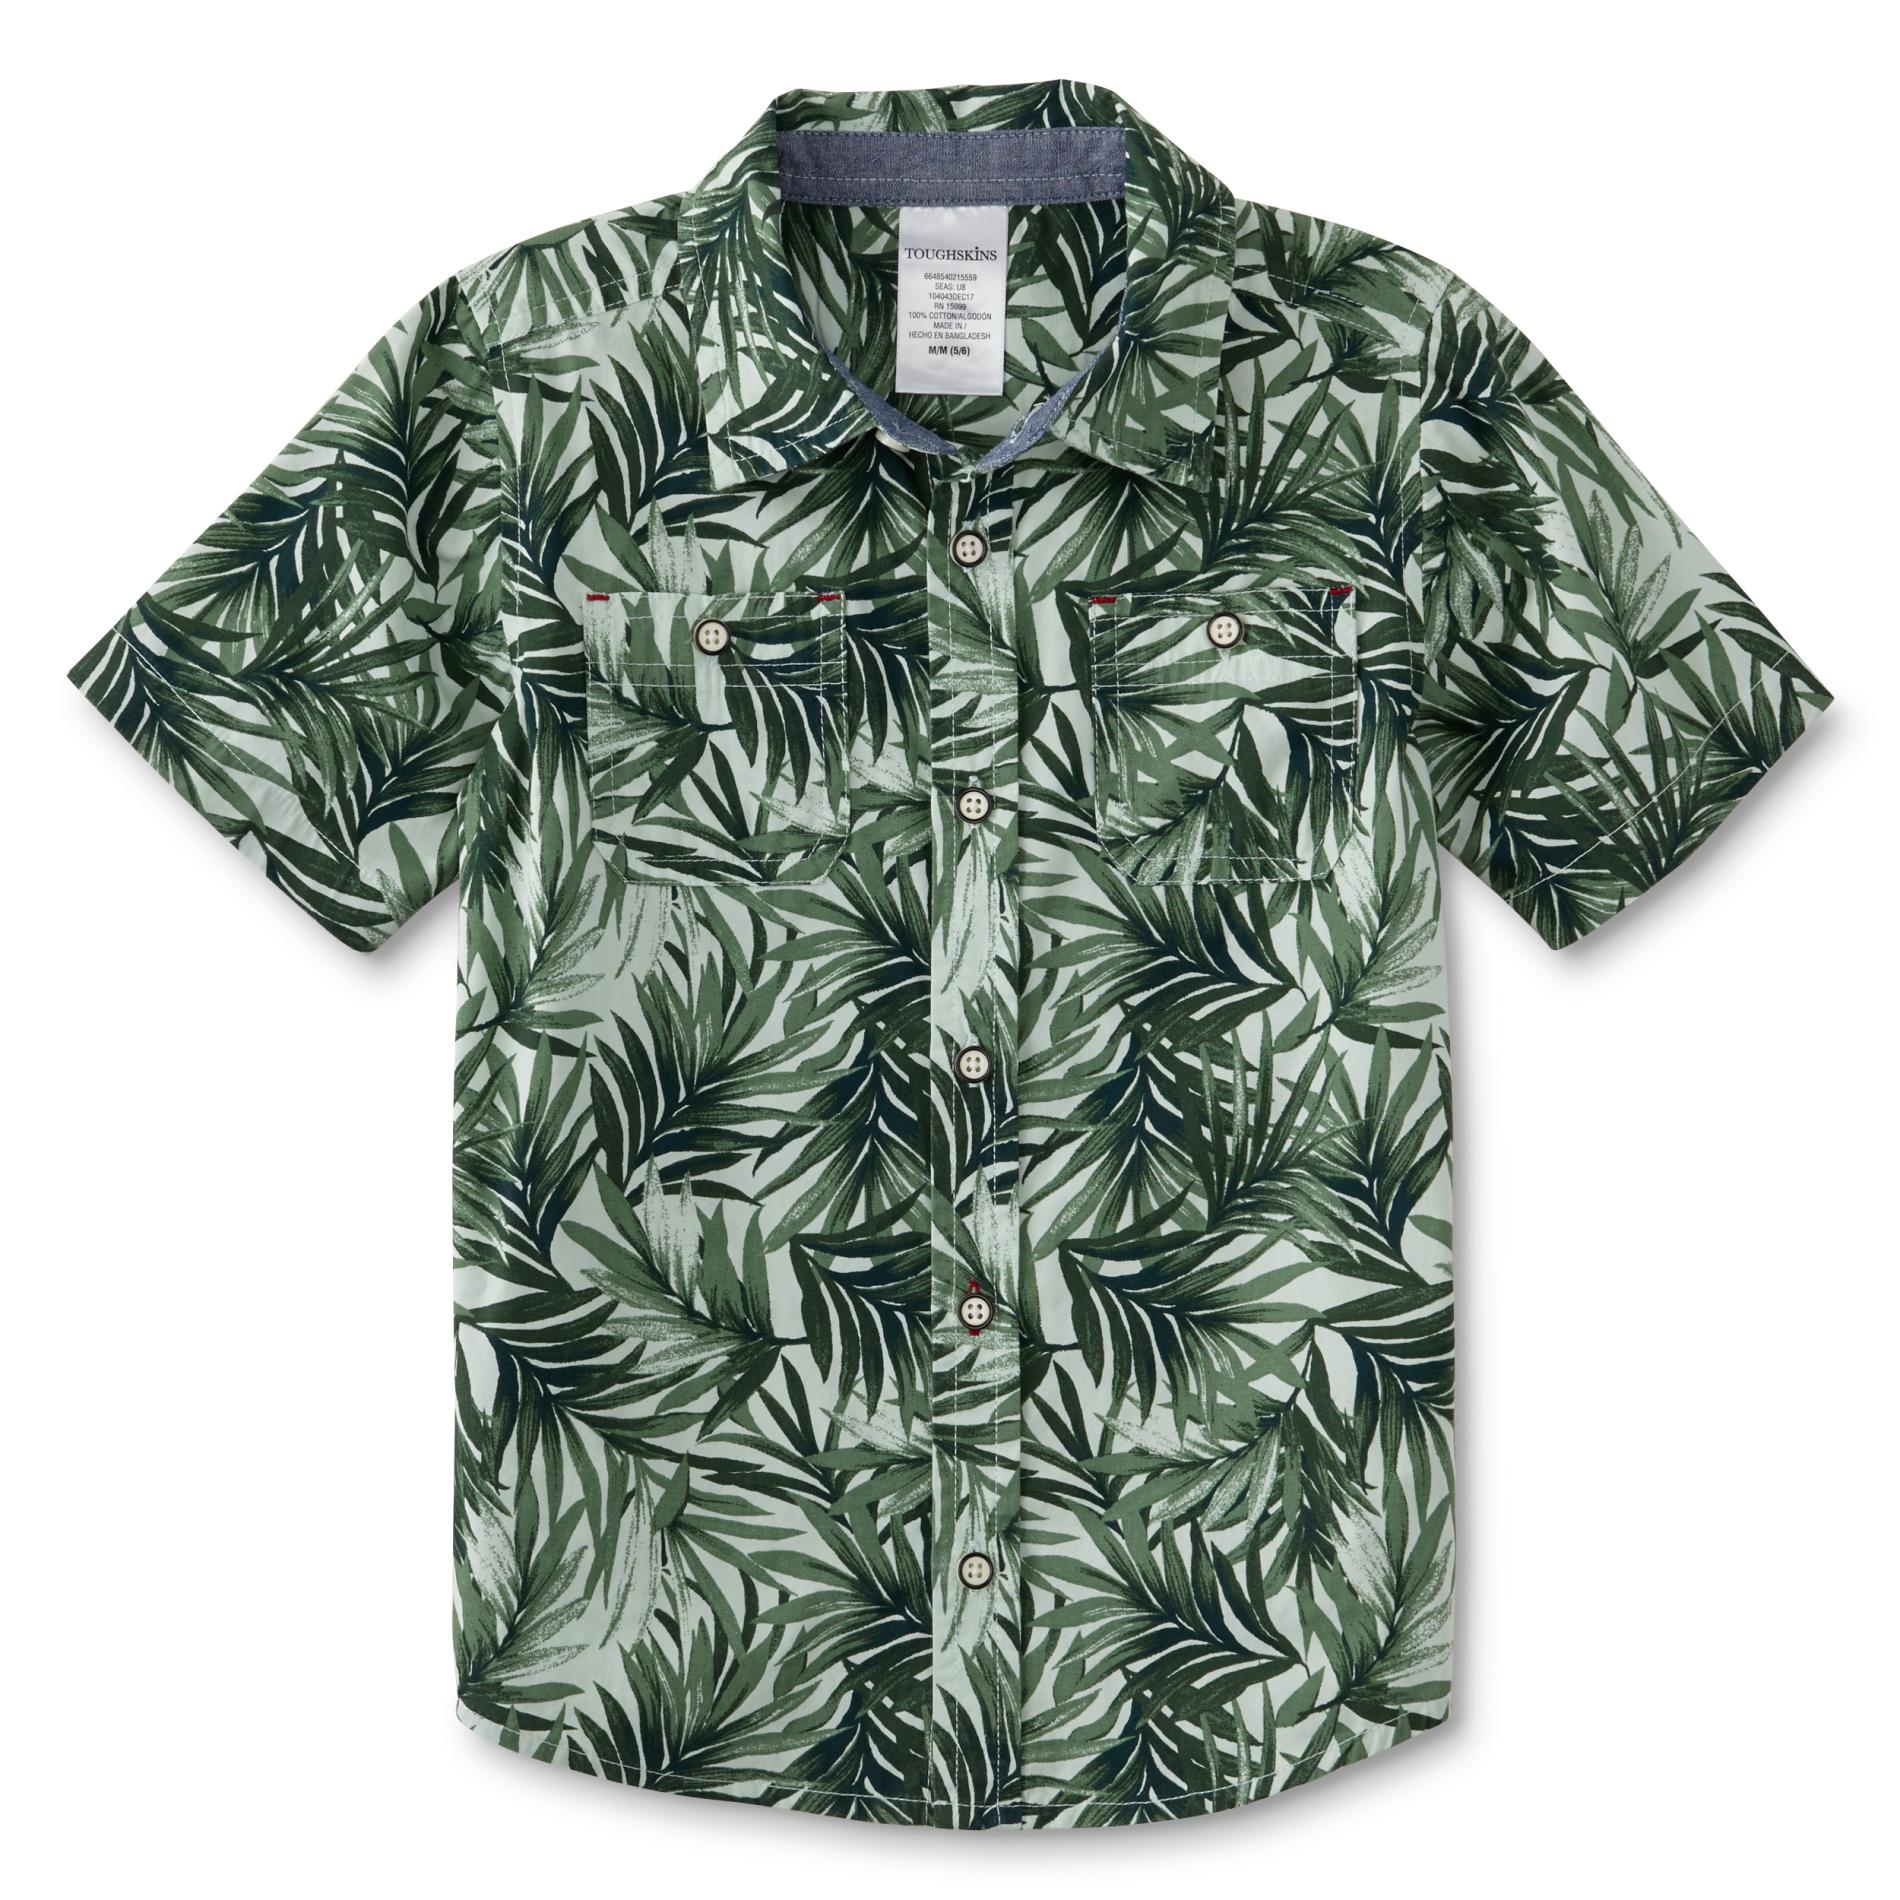 Toughskins Boys' Button-Front Shirt - Tropical